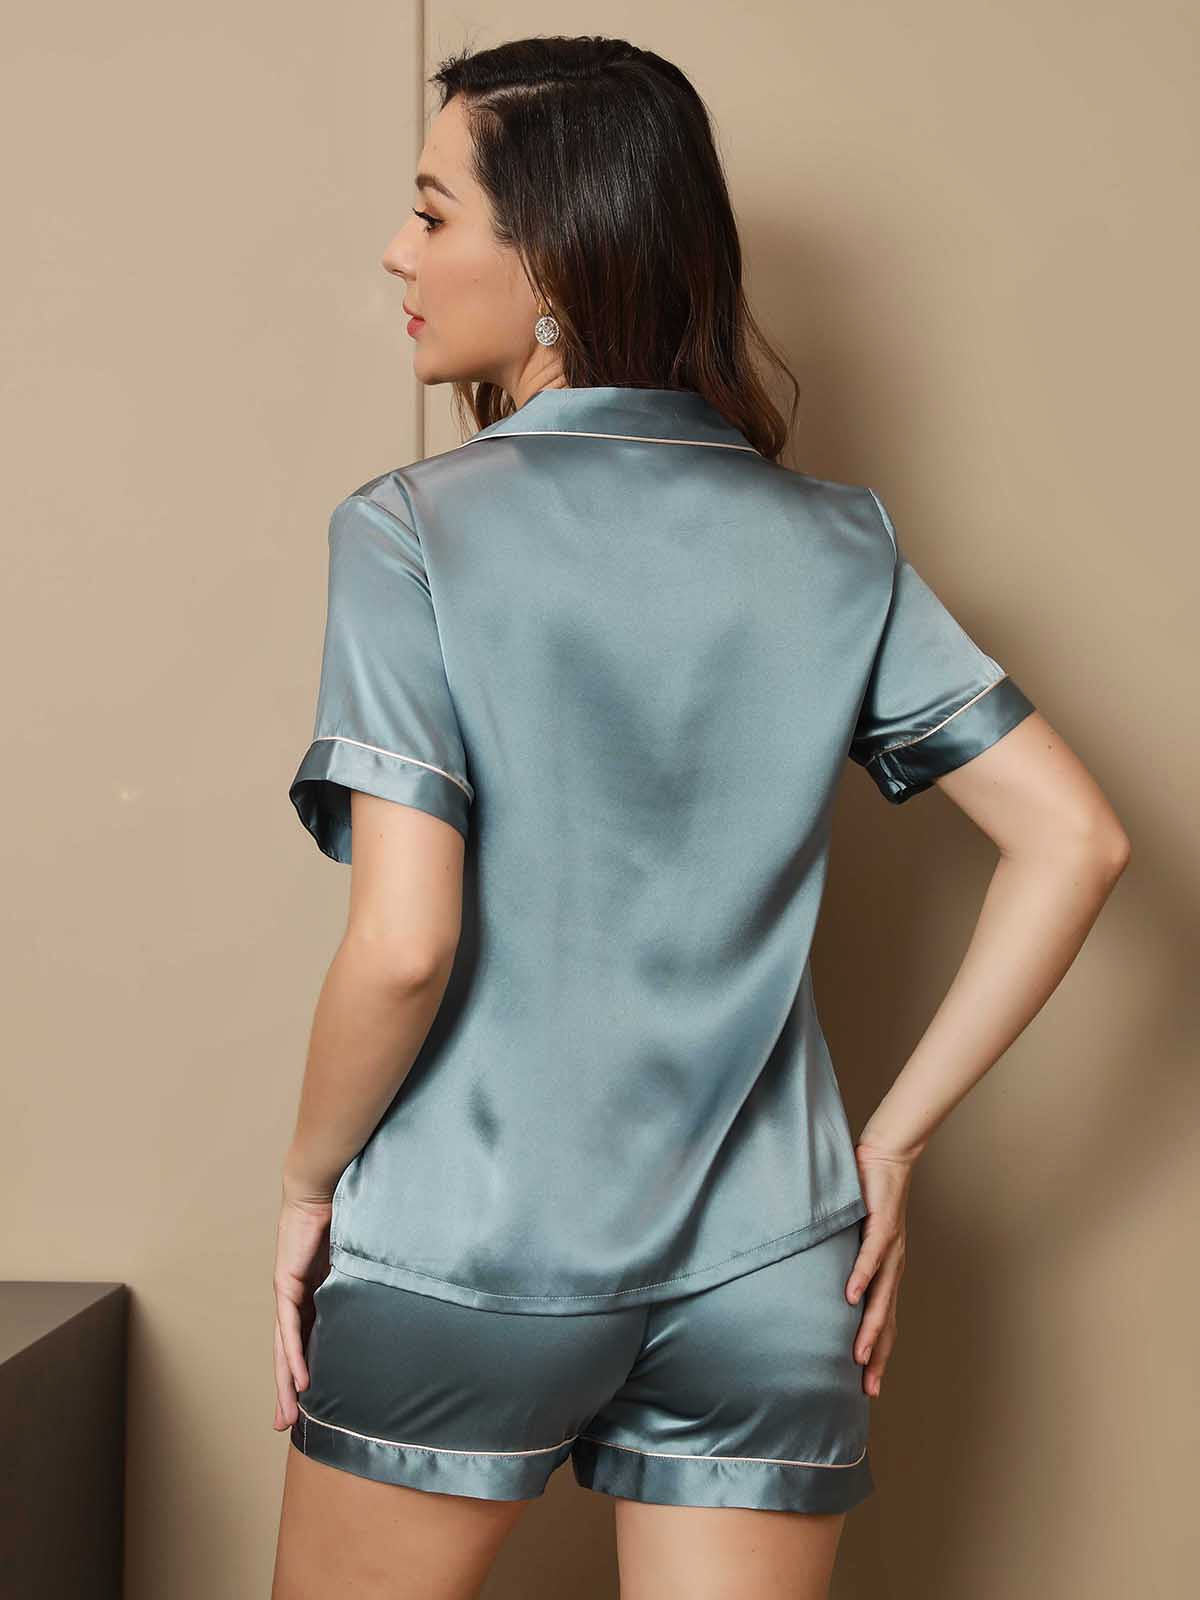 Short Sleeve Satin Sleepwear 100% Silk Pajama Set Women Home Wear